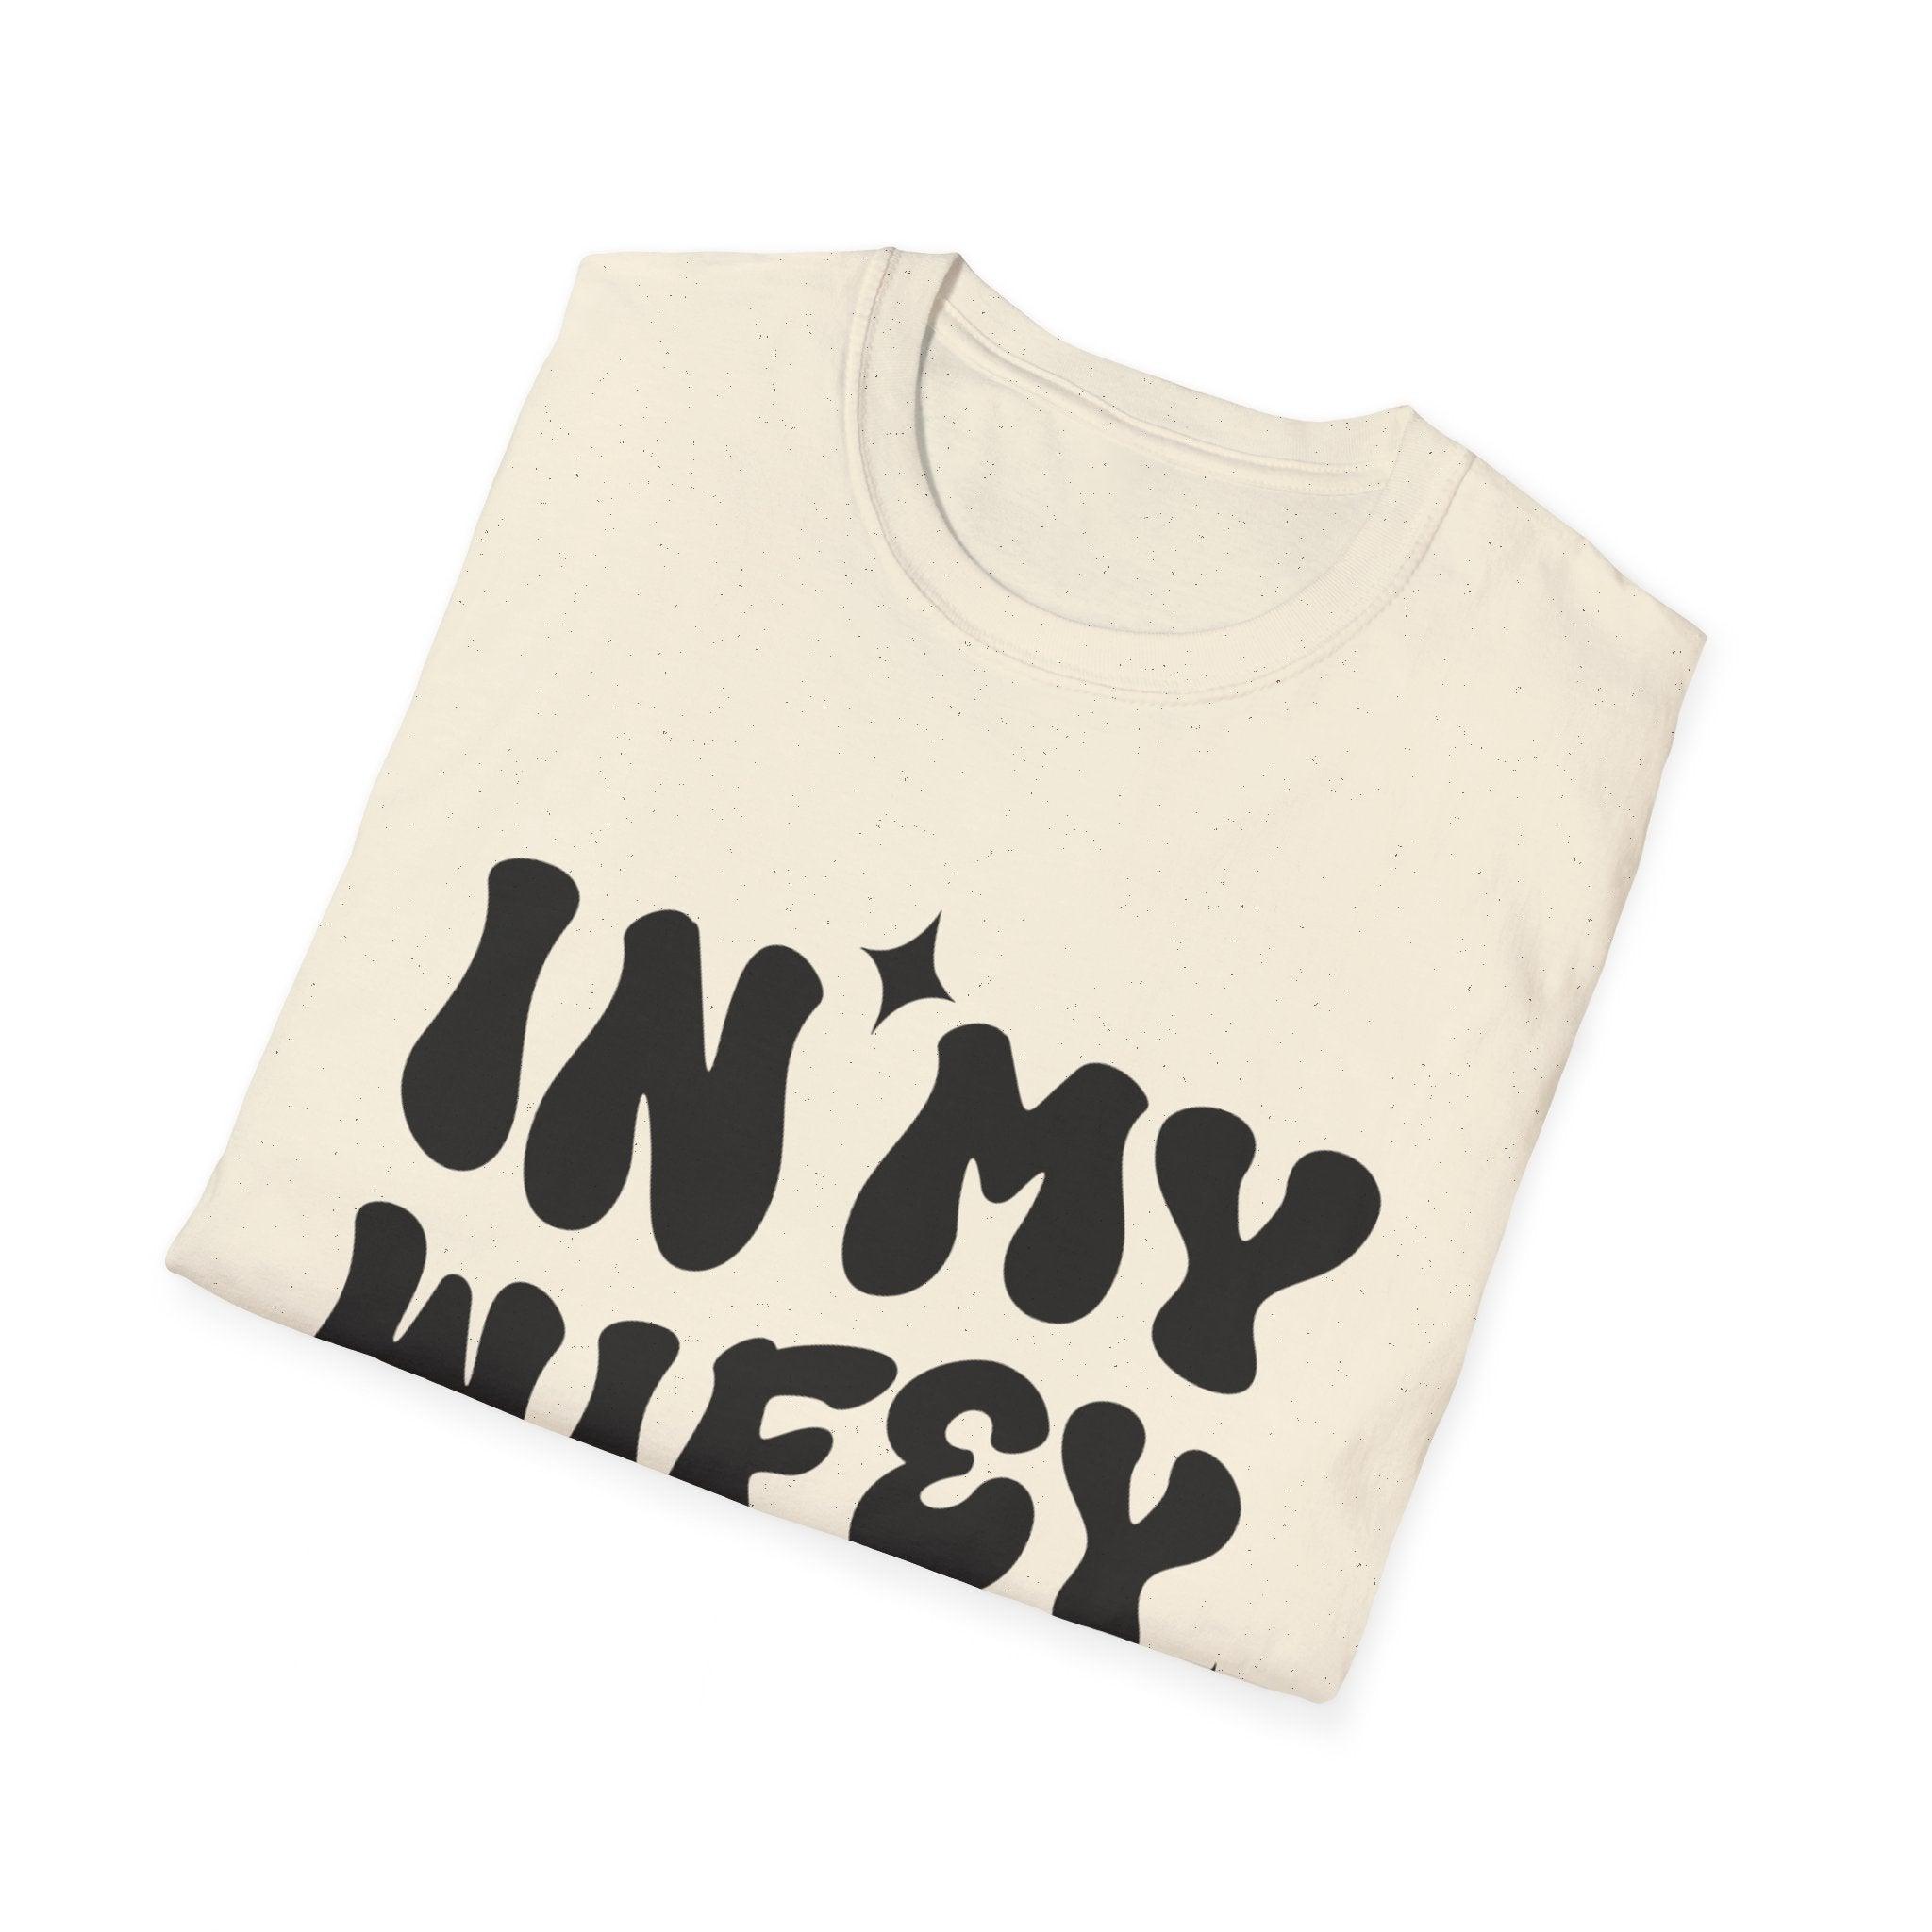 In My Wifey Era Unisex Softstyle T-Shirt